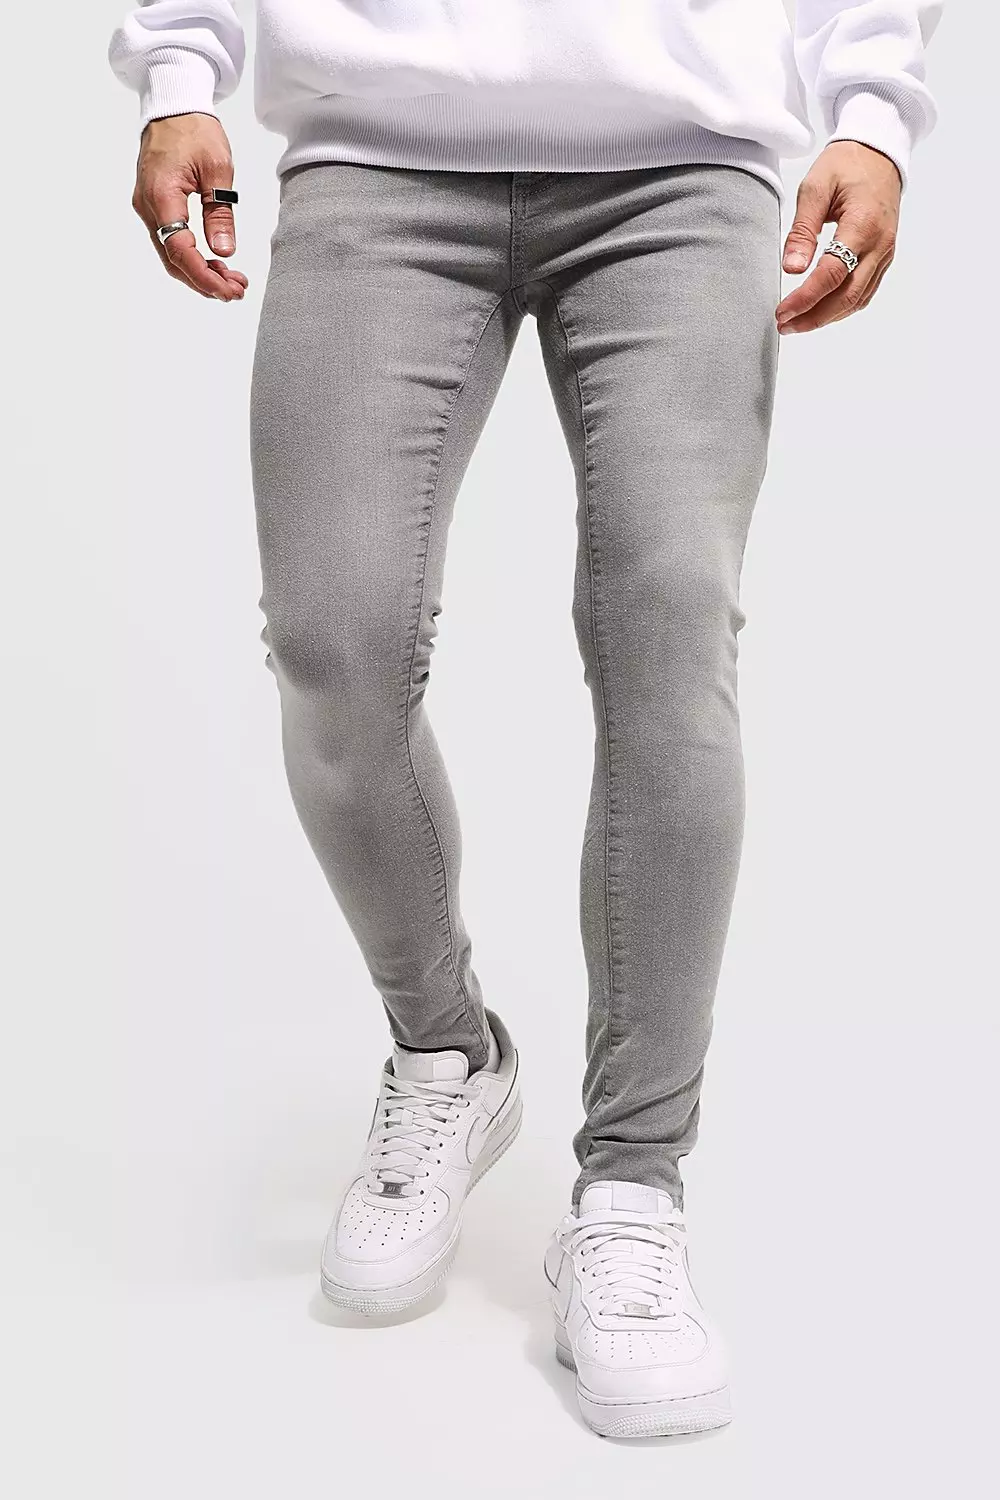 Kalmte vonnis Salie Super Skinny Jeans | boohooMAN USA